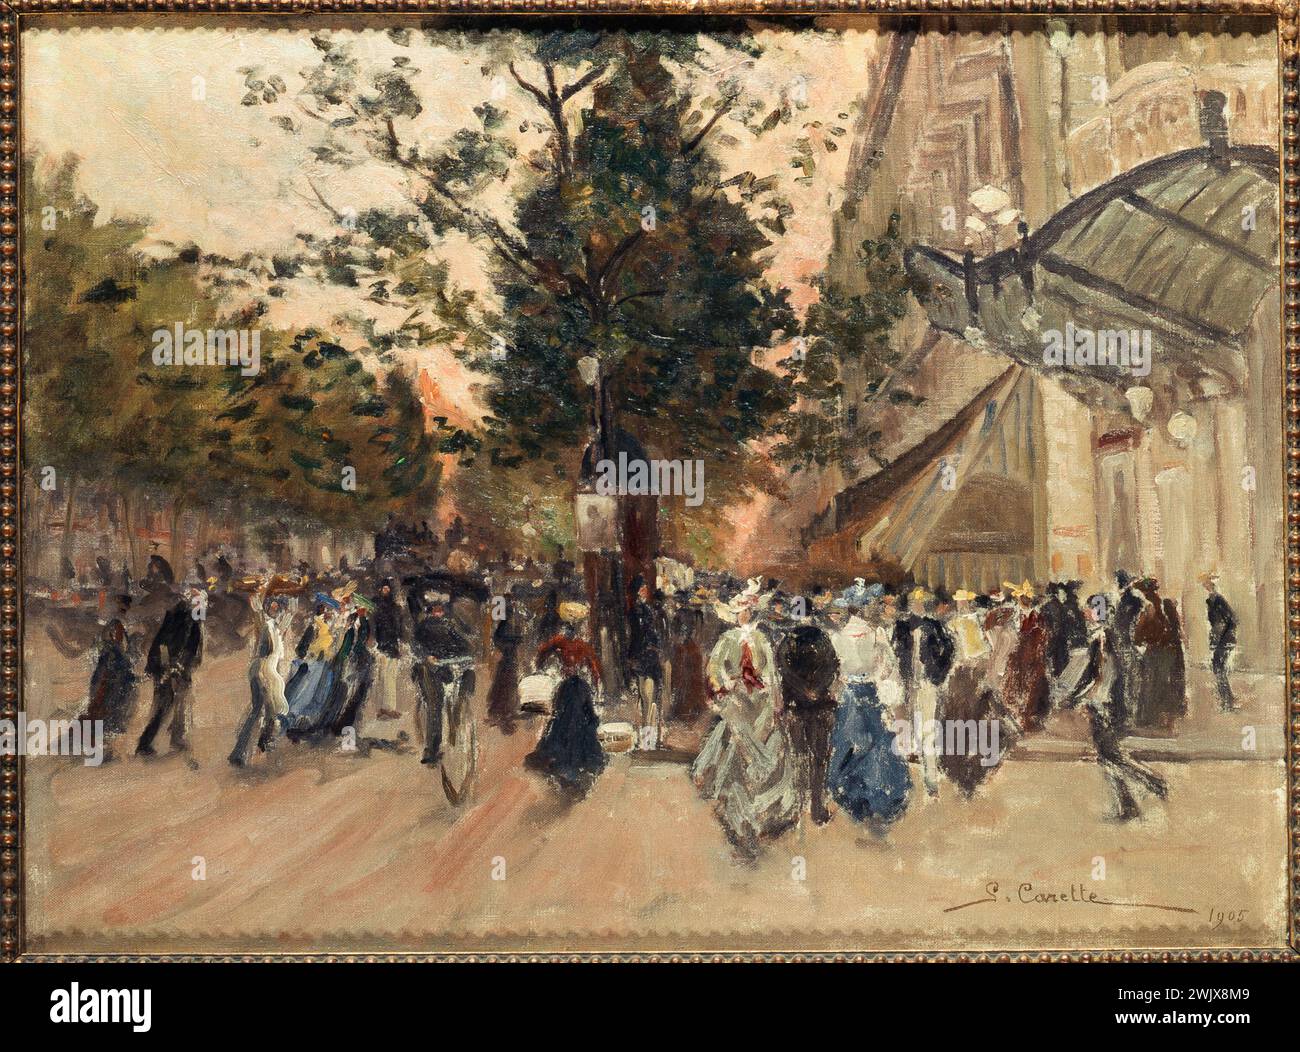 Georges Carette (born in 1854). 'The boulevard des Capucines'. Oil on canvas, 1905. Paris, Carnavalet museum. 76092-4 Boulevard des Capucines, iieme II 2nd 2nd 2nd arrondissement, street scene, oil on canvas Stock Photo